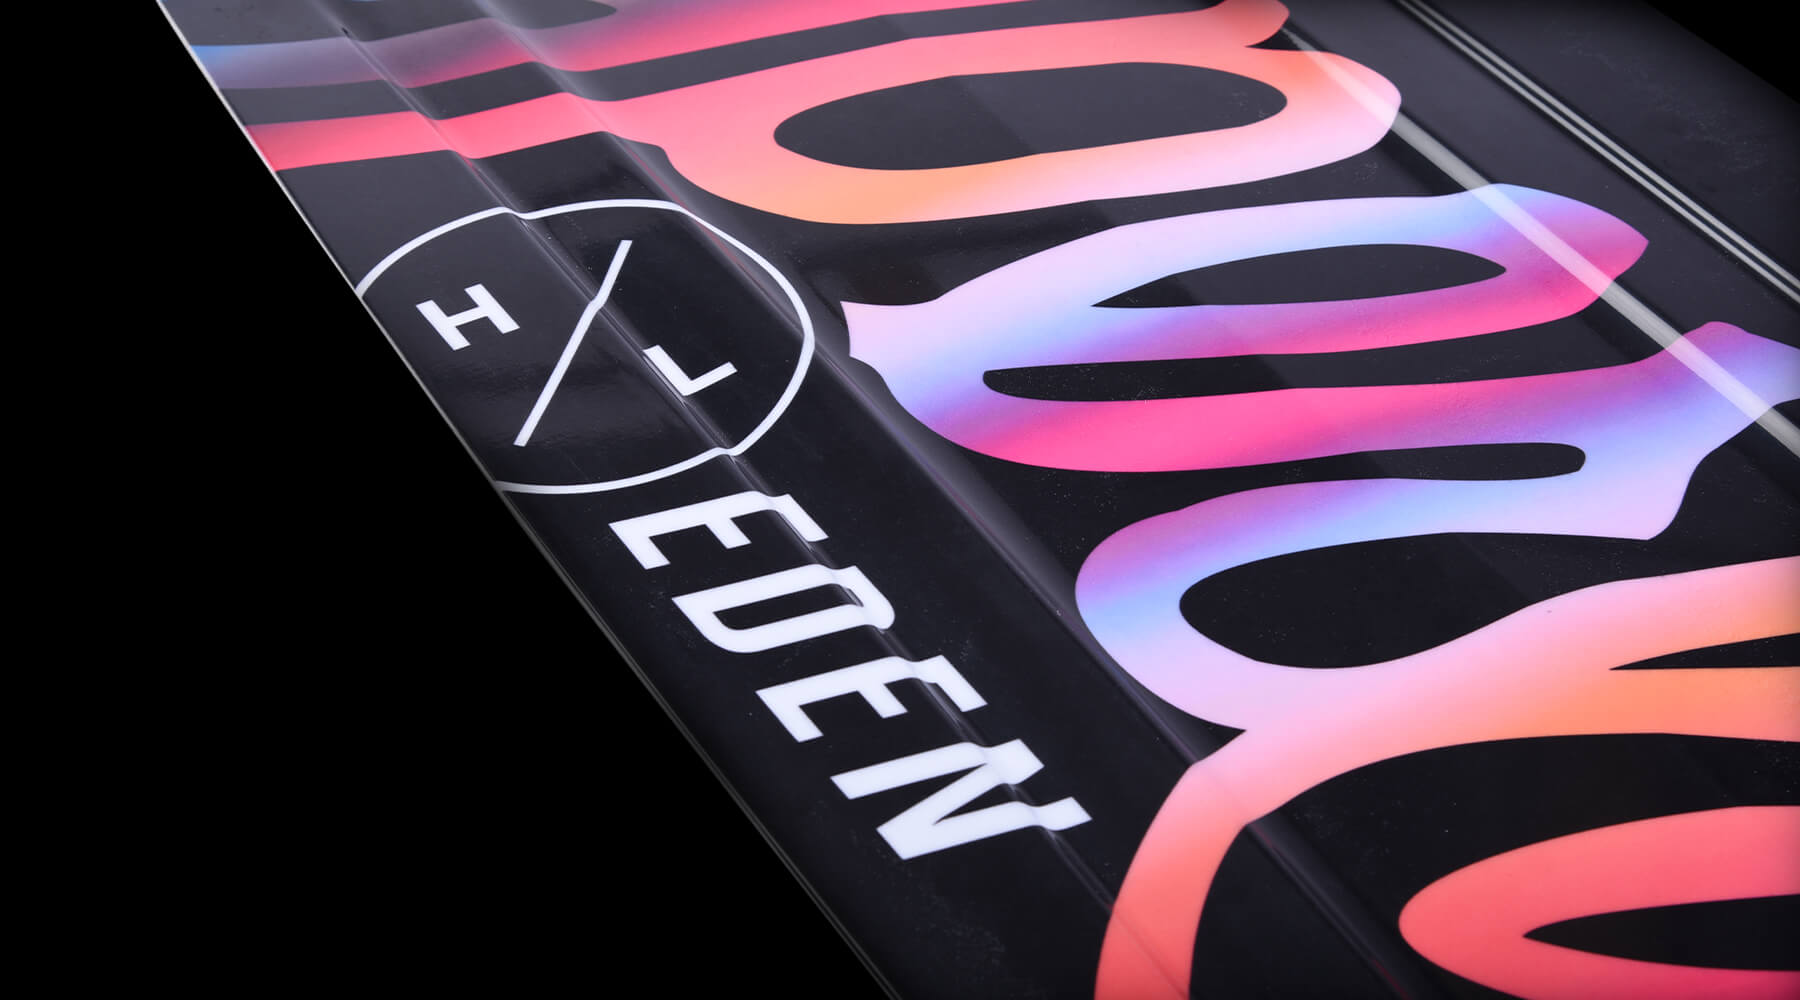 Hyperlite Eden 2.0 Skateboard with an asymmetrical design.